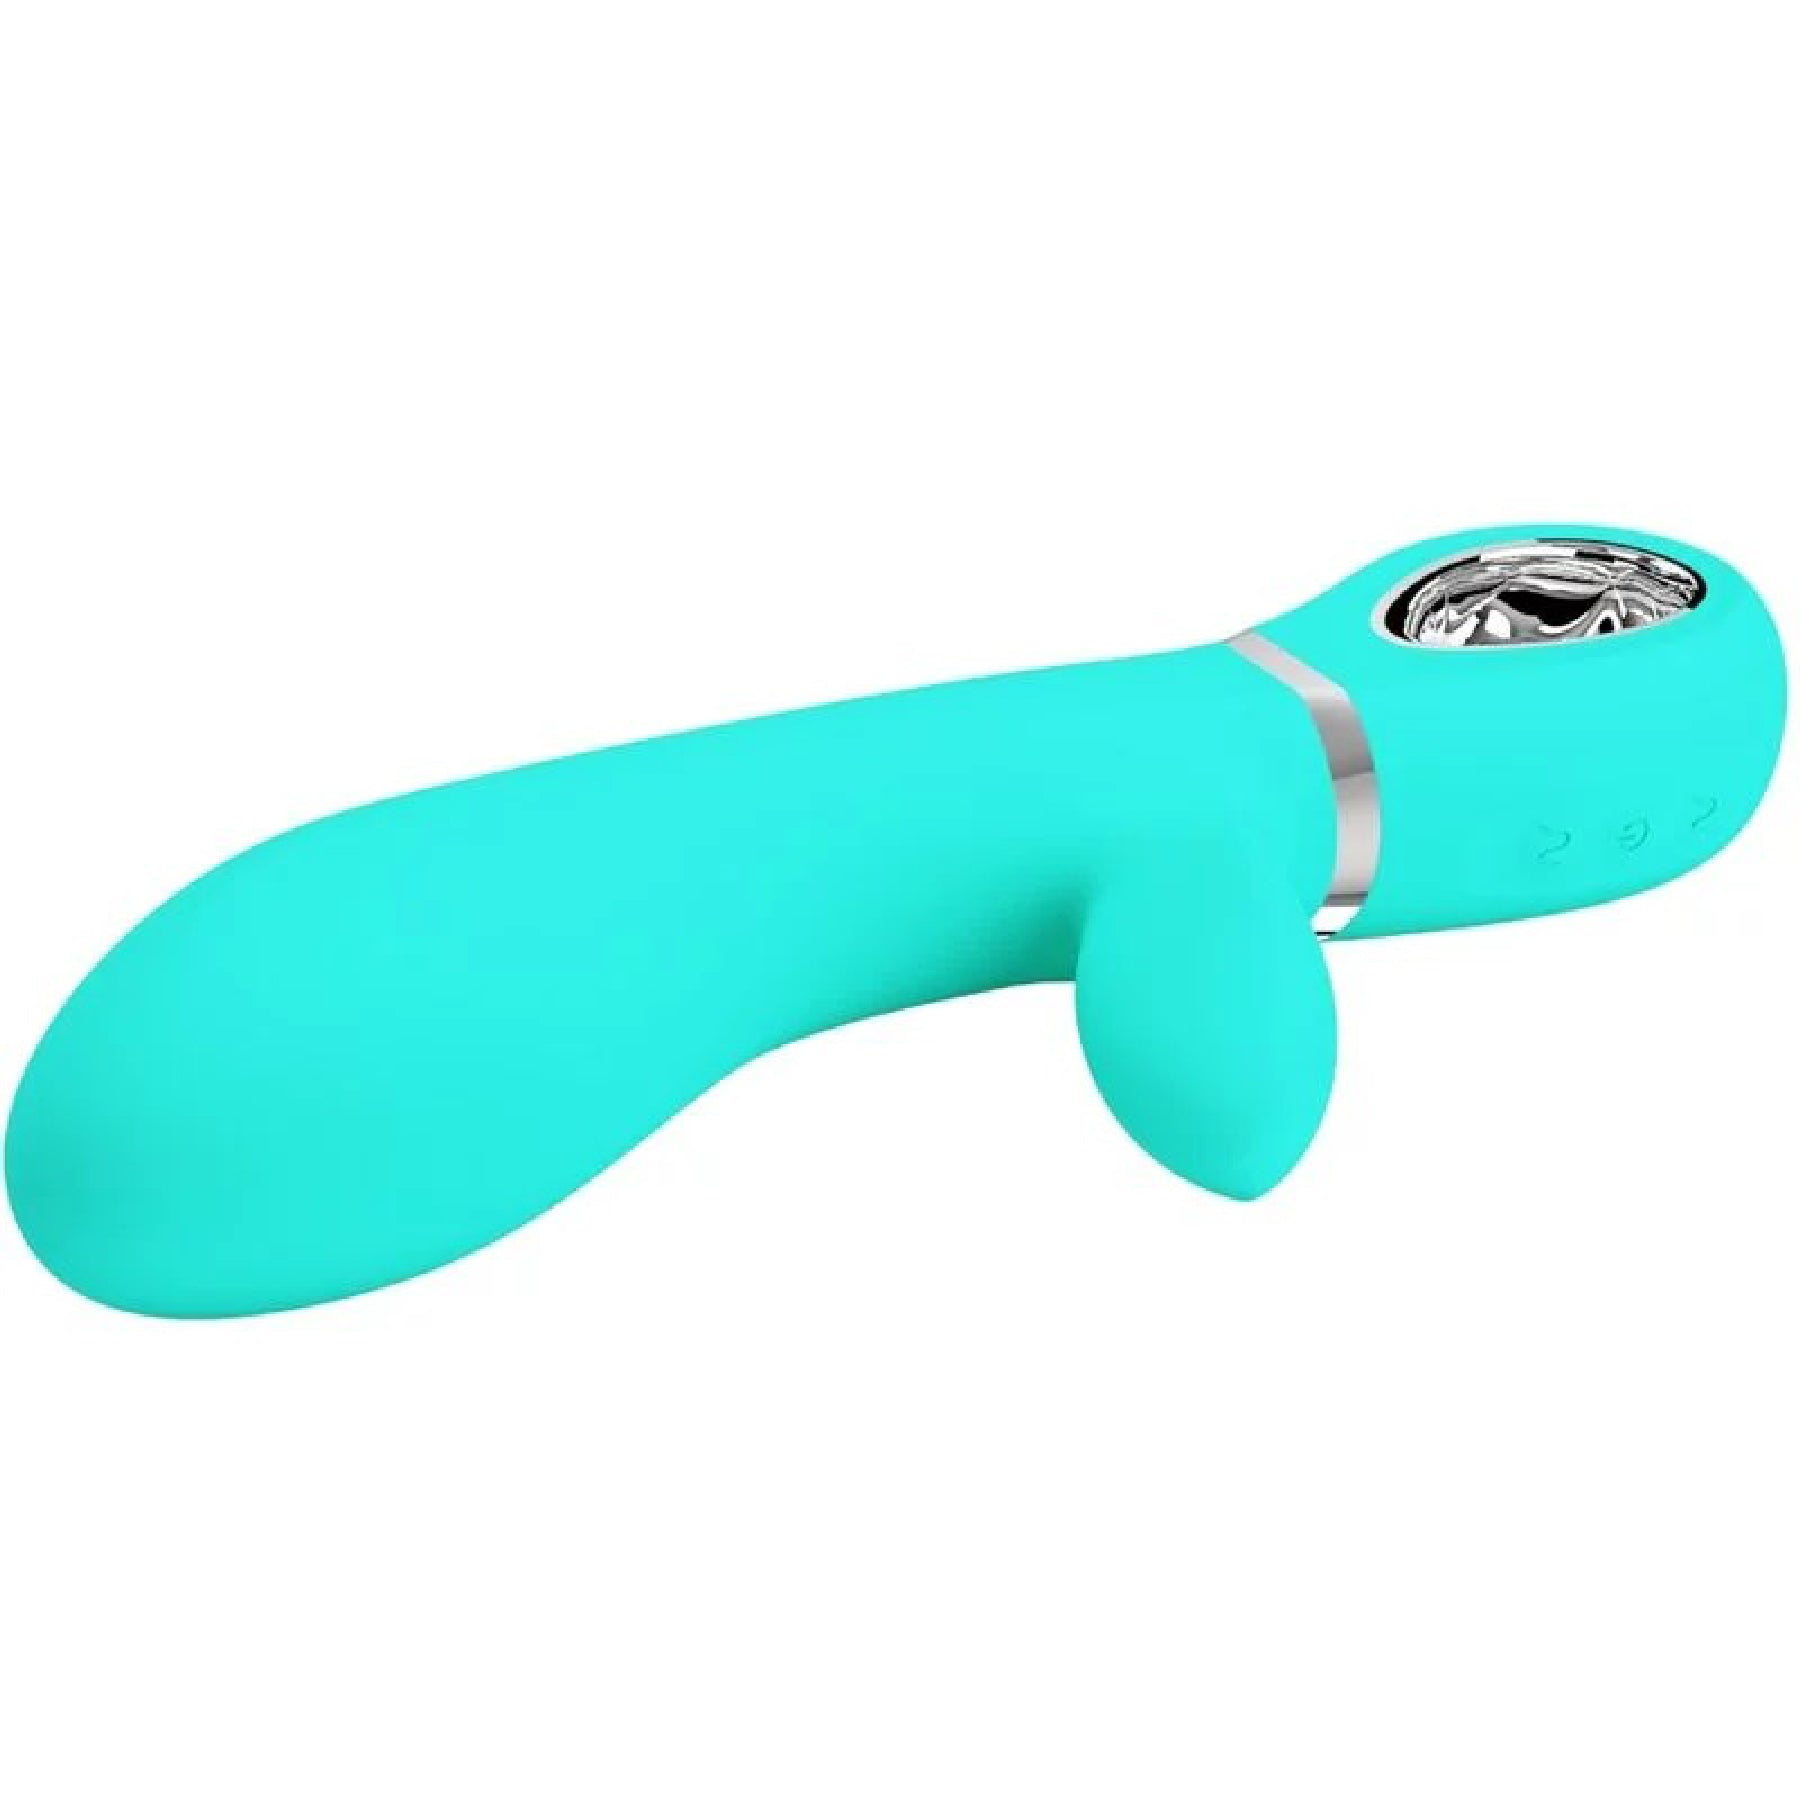 Thomas Super Soft Silicone Rabbit Vibrator -  Turquoise-1